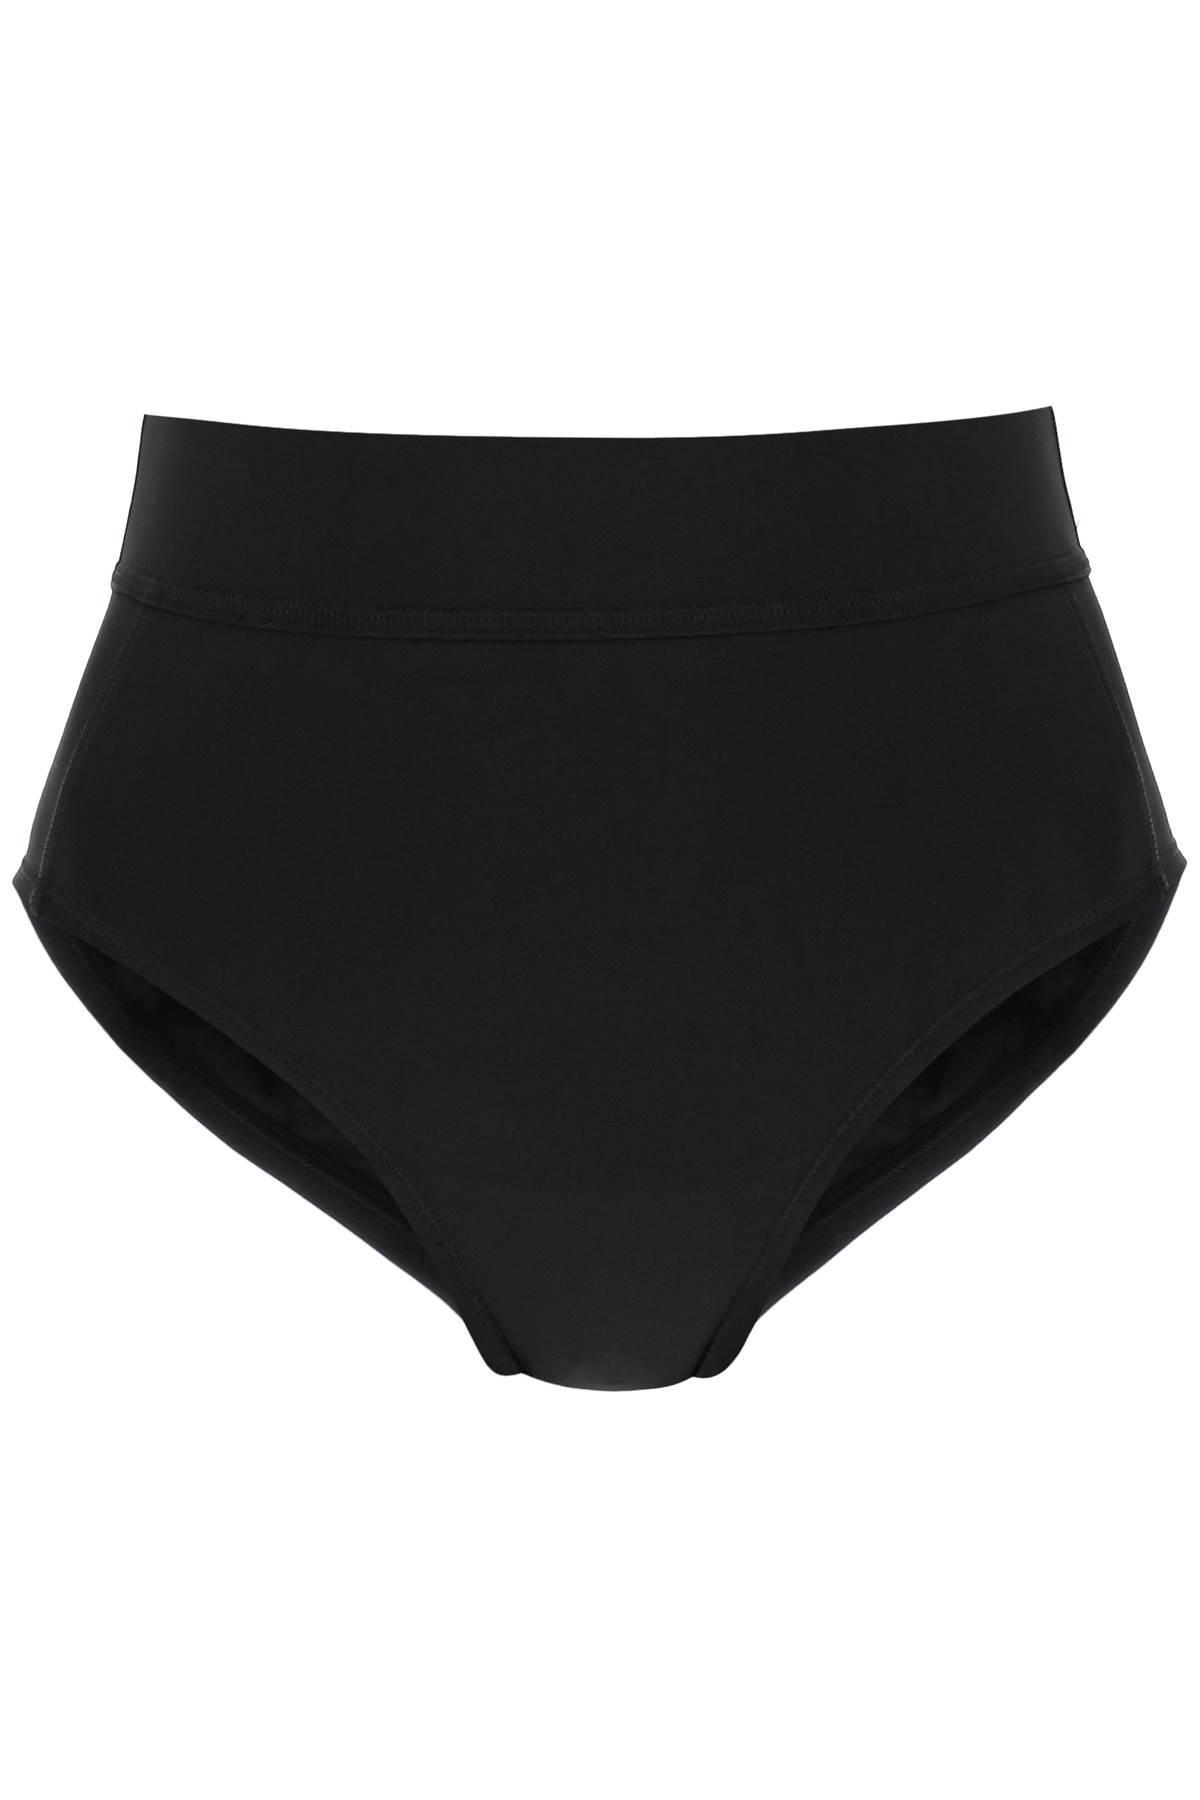 Y-3 High-waisted Bikini Slip in Black | Lyst